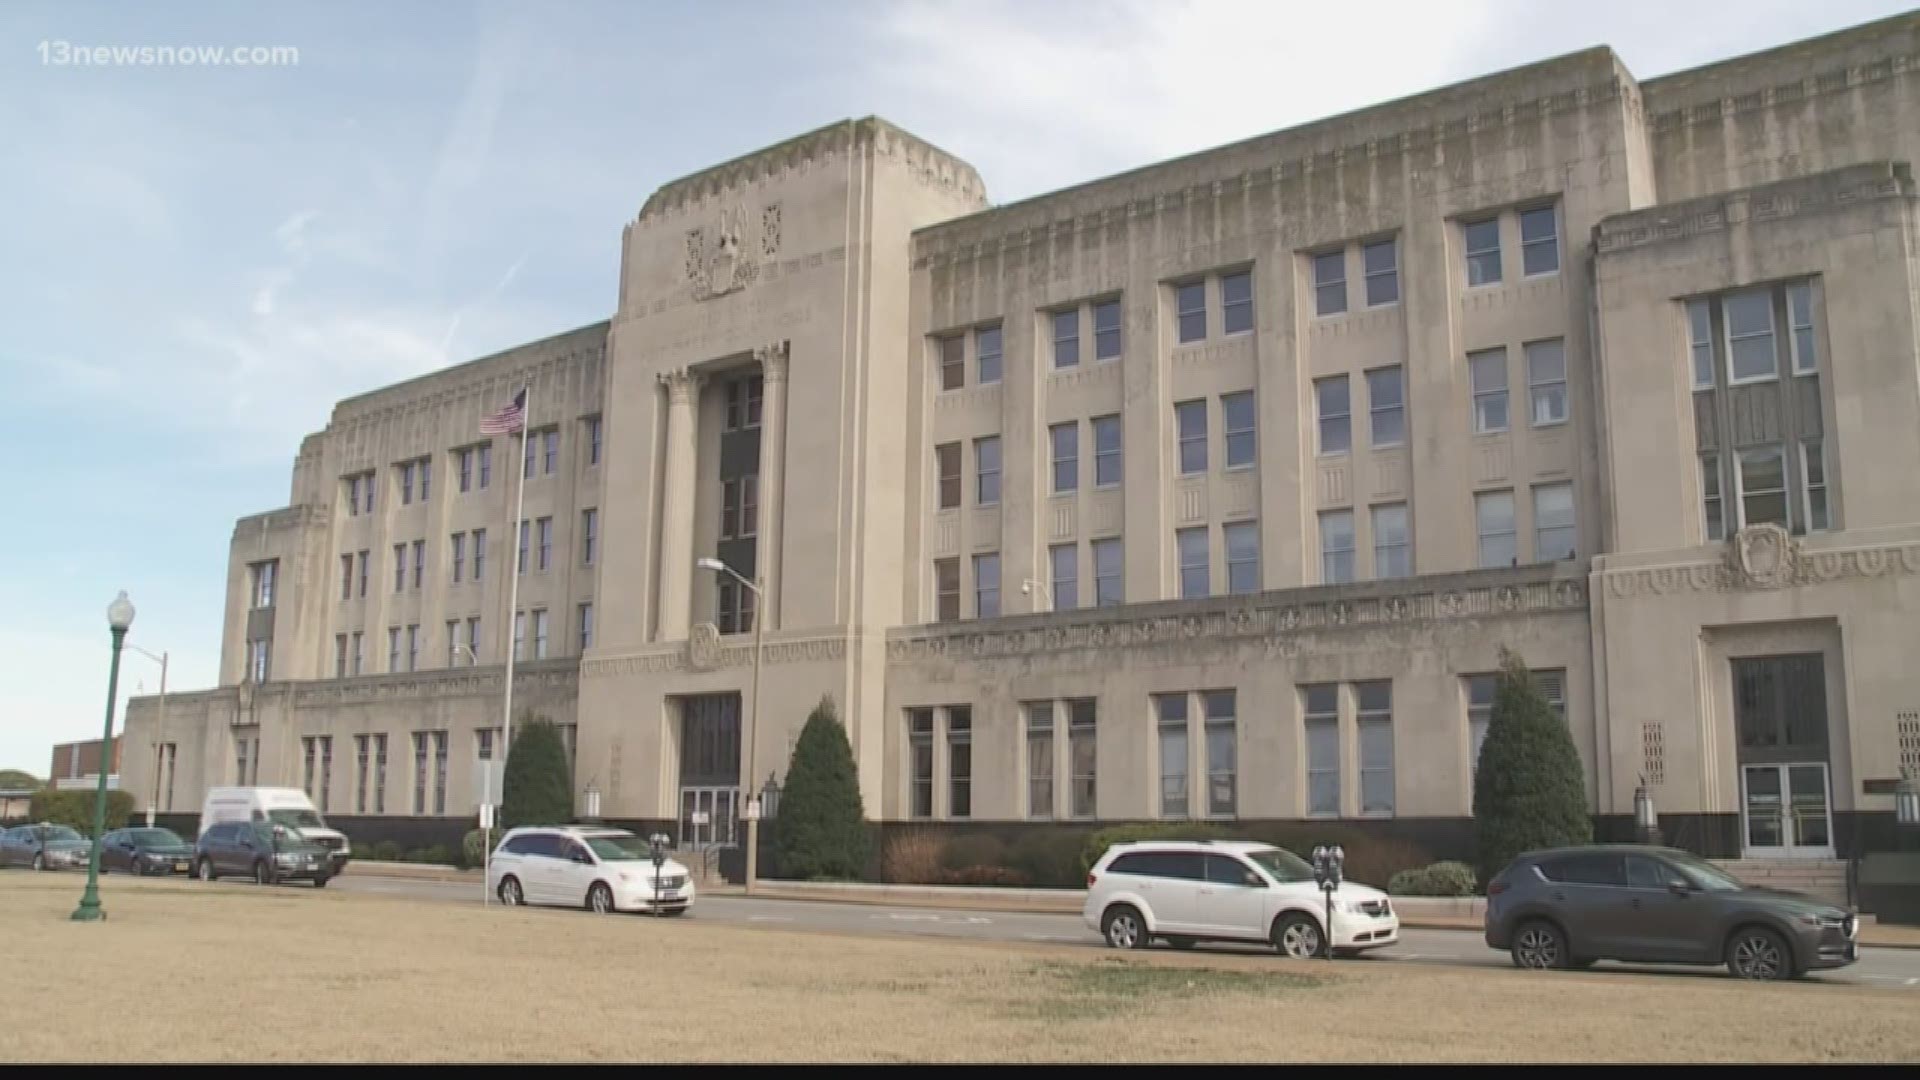 Eastern District Court of Virginia prepares for furloughs, slowdowns